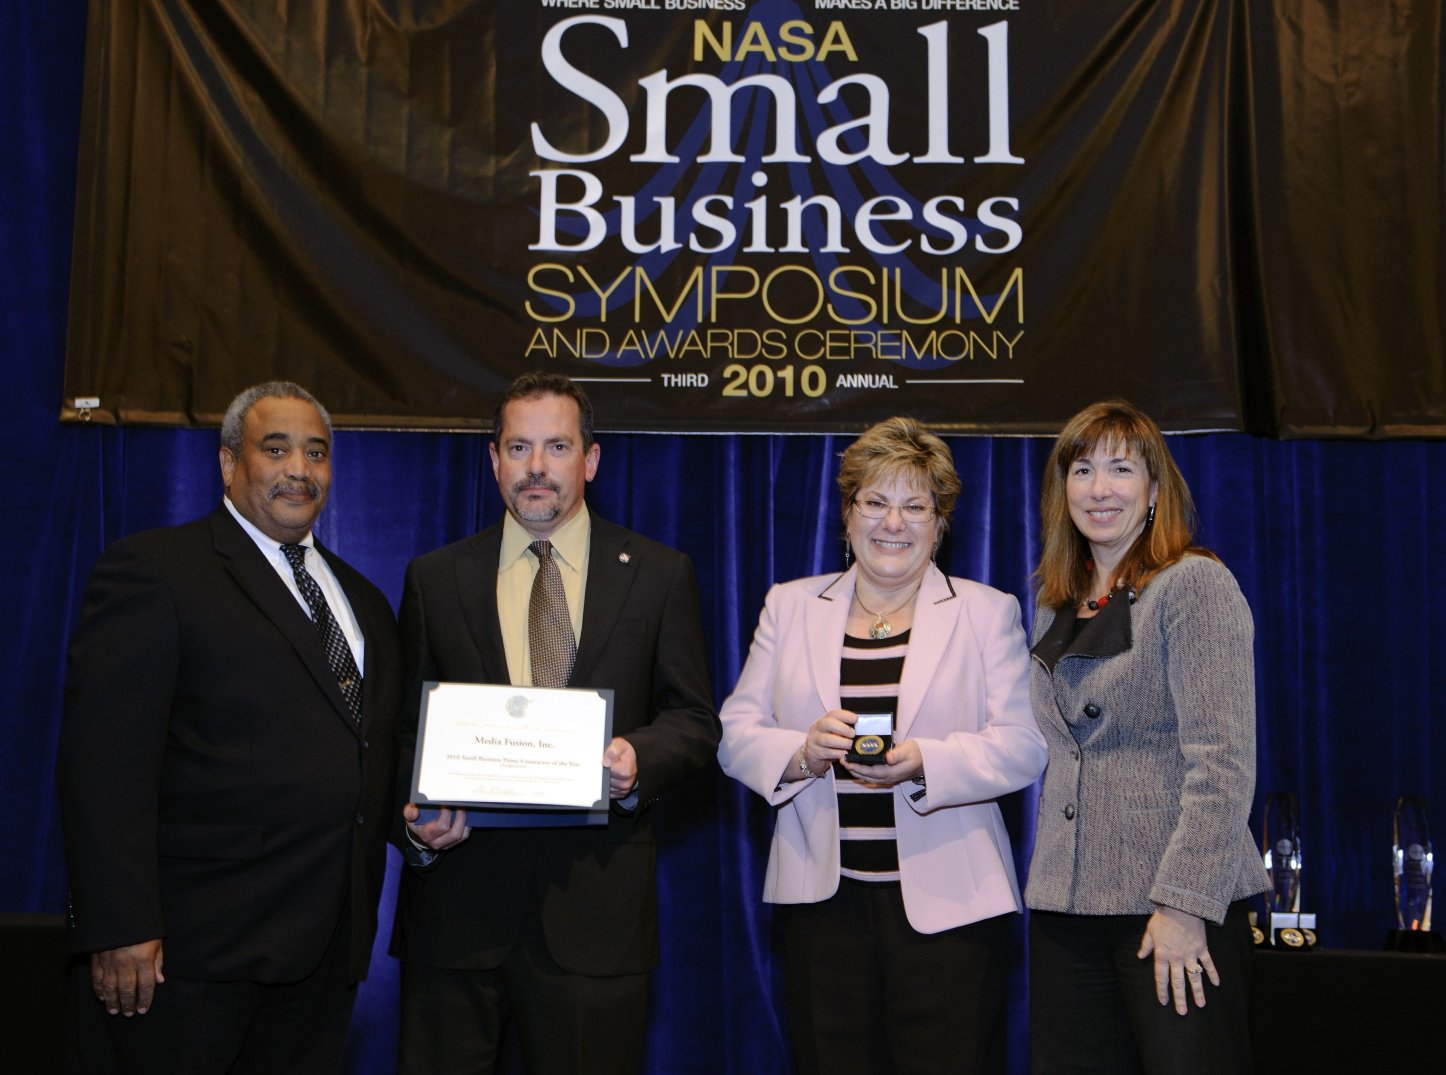 Media Fusion founder Tim McElyea receiving an award at the 2010 NASA Small Business Symposium